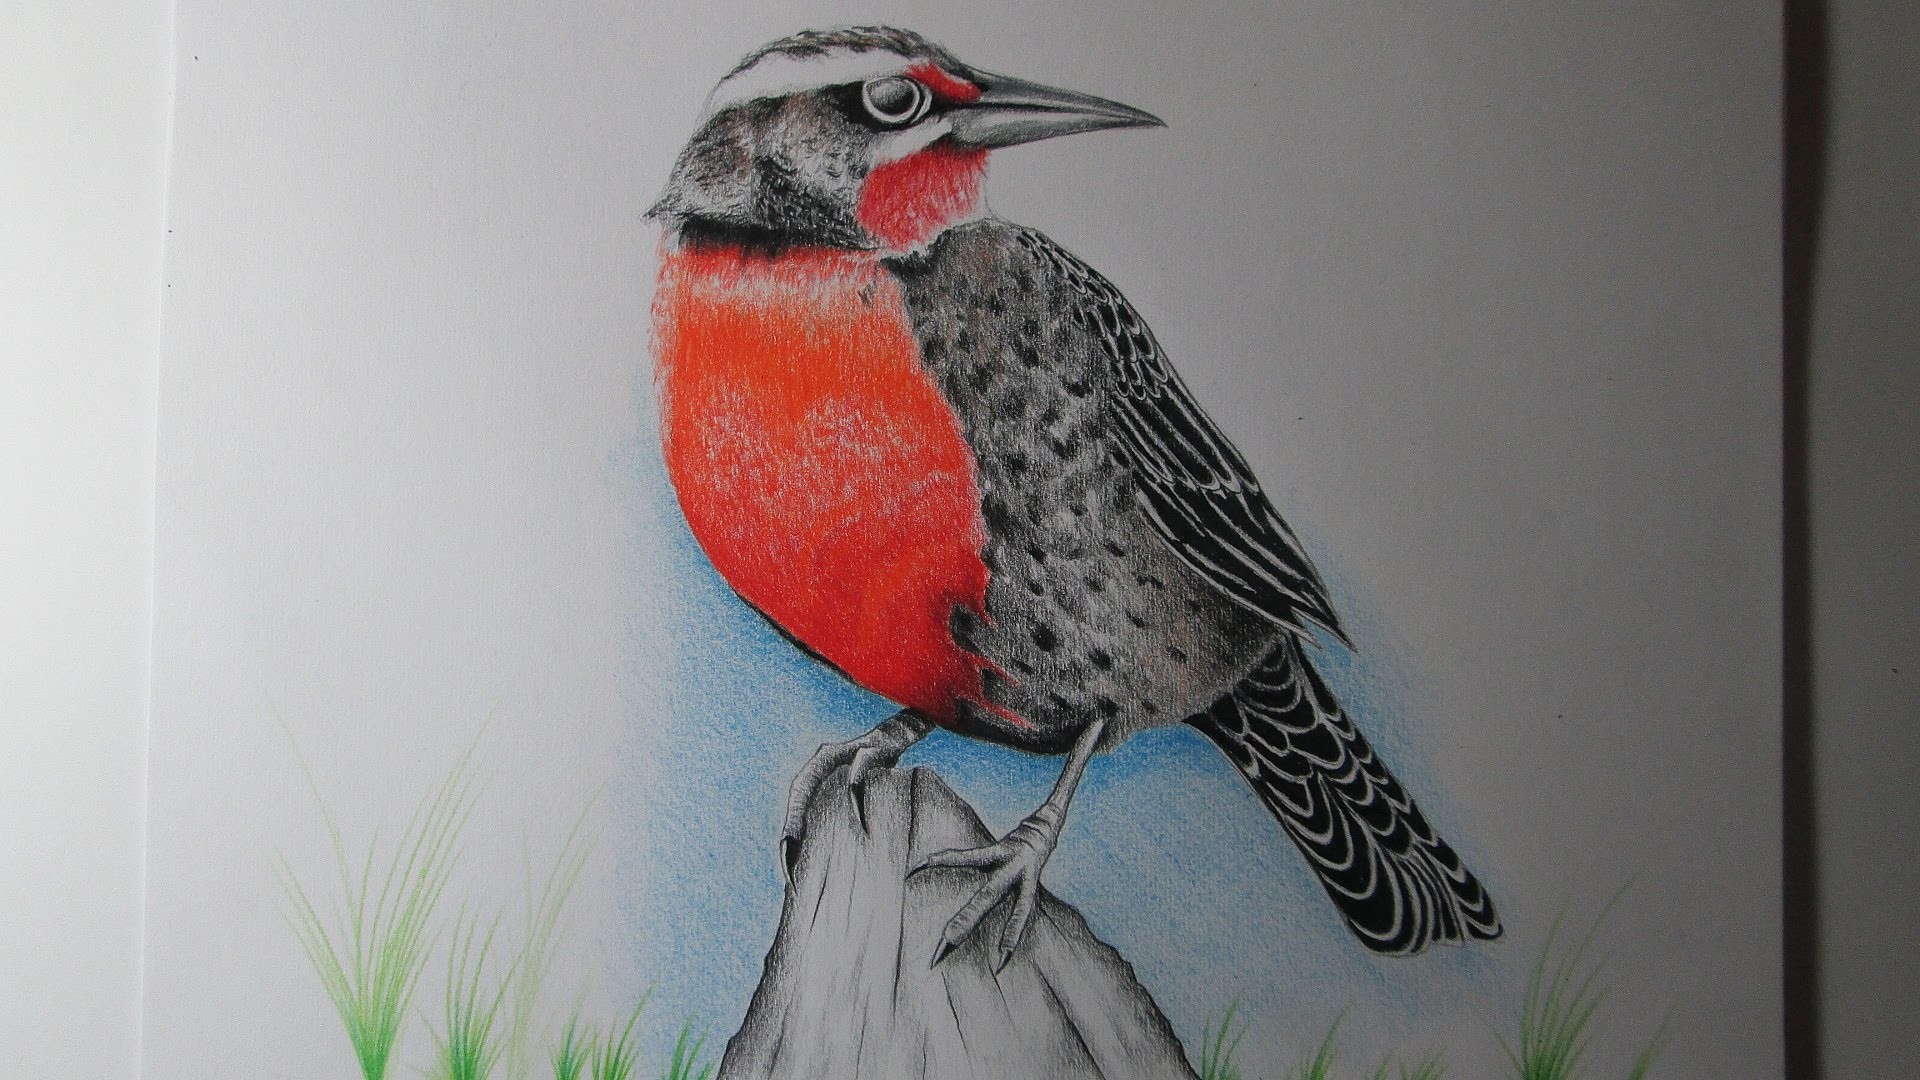 Cómo dibujar un pájaro con lápices de colores paso a paso, aprender a dibujar aves